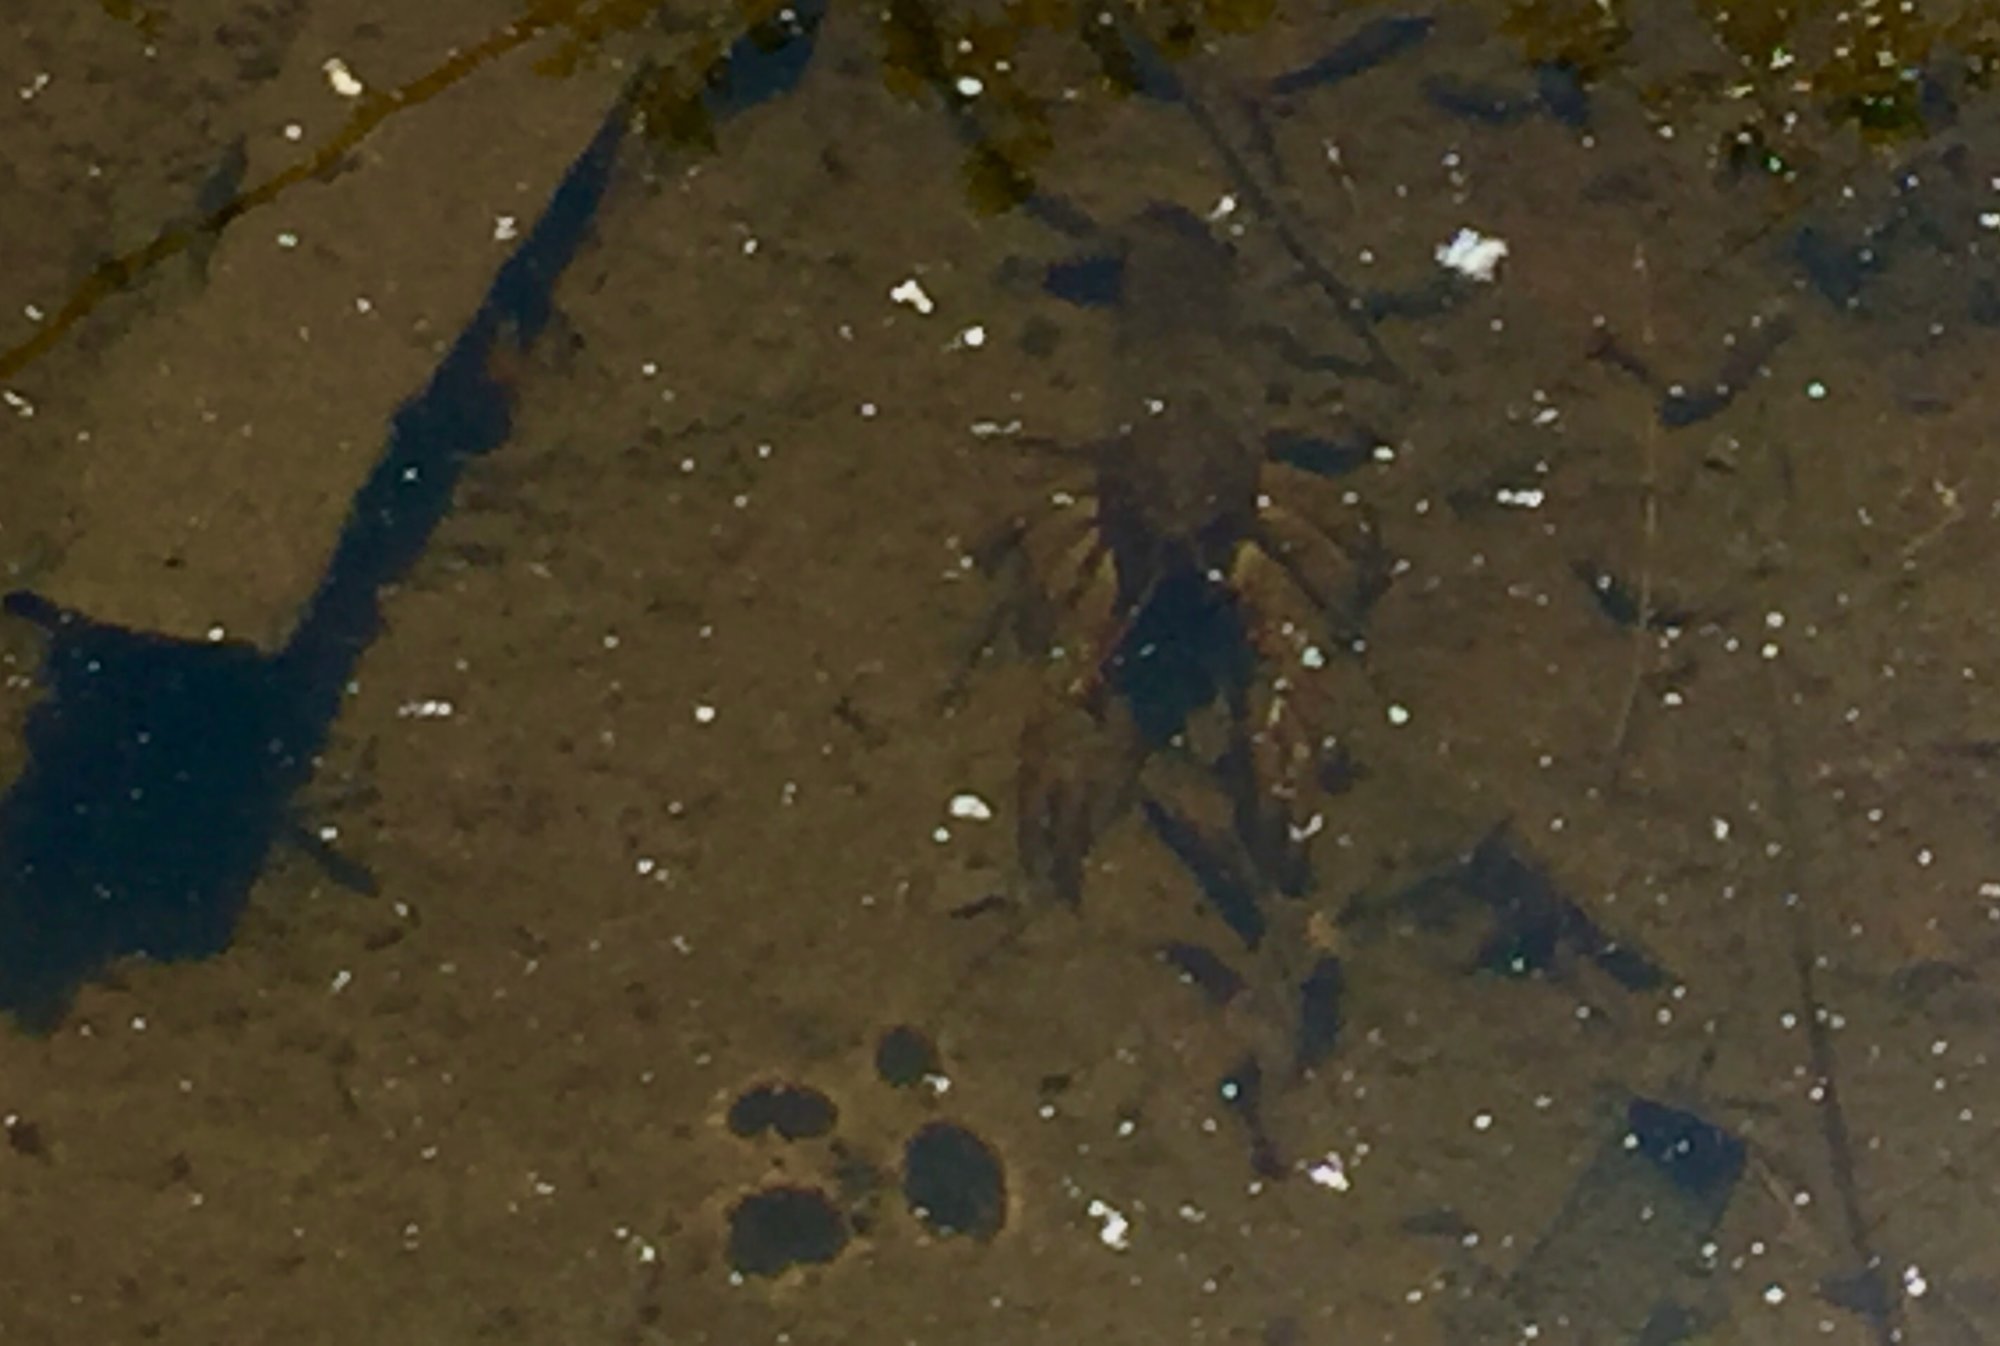 crawfish in pond.jpg